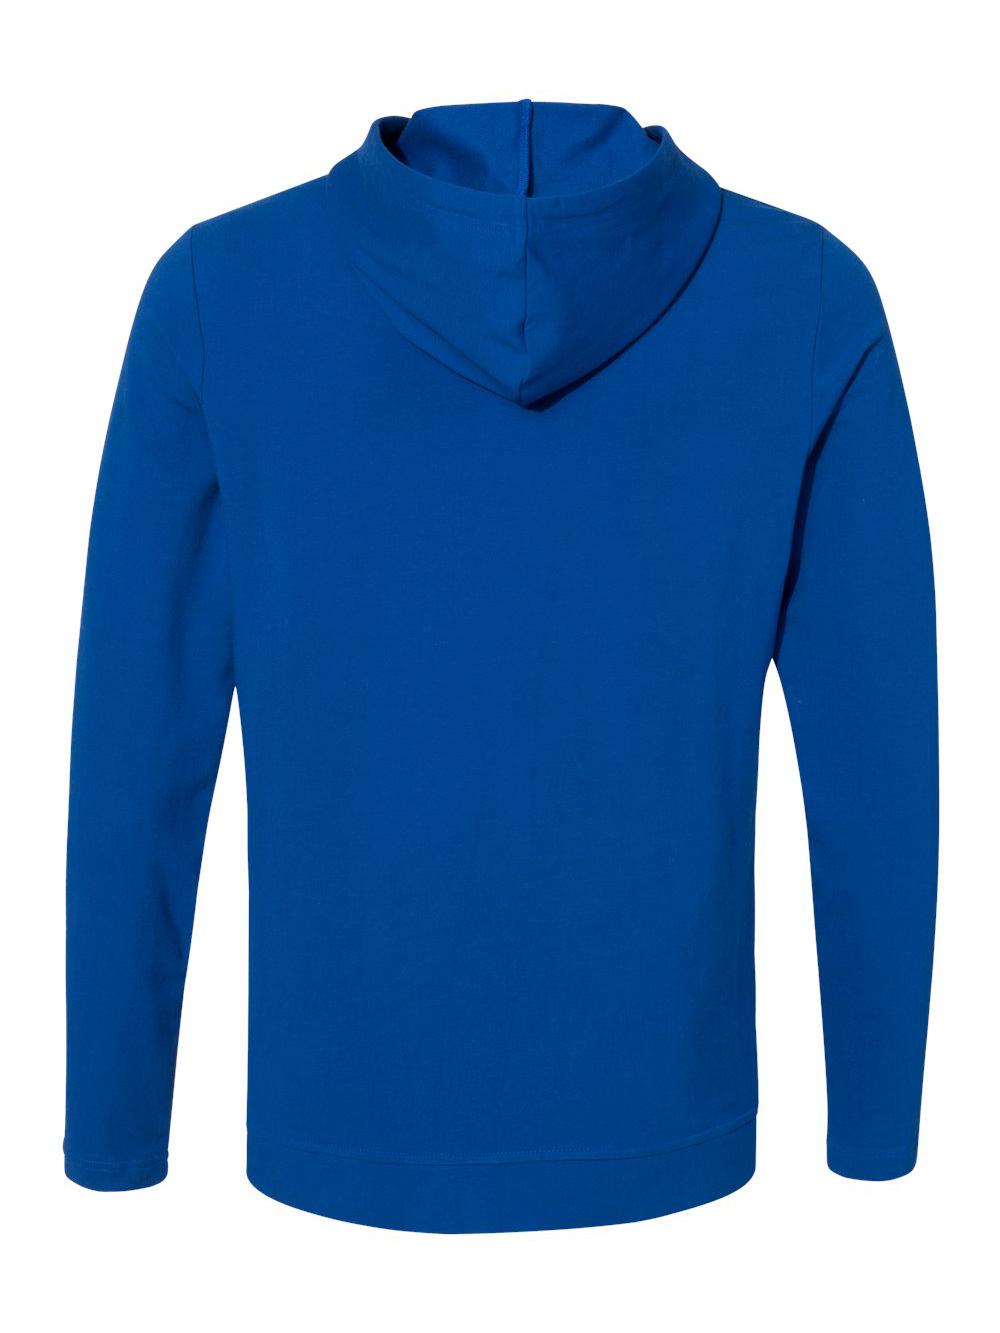 Adidas - Lightweight Hooded Sweatshirt - A450 - Collegiate Royal - Size: XL - image 3 of 3